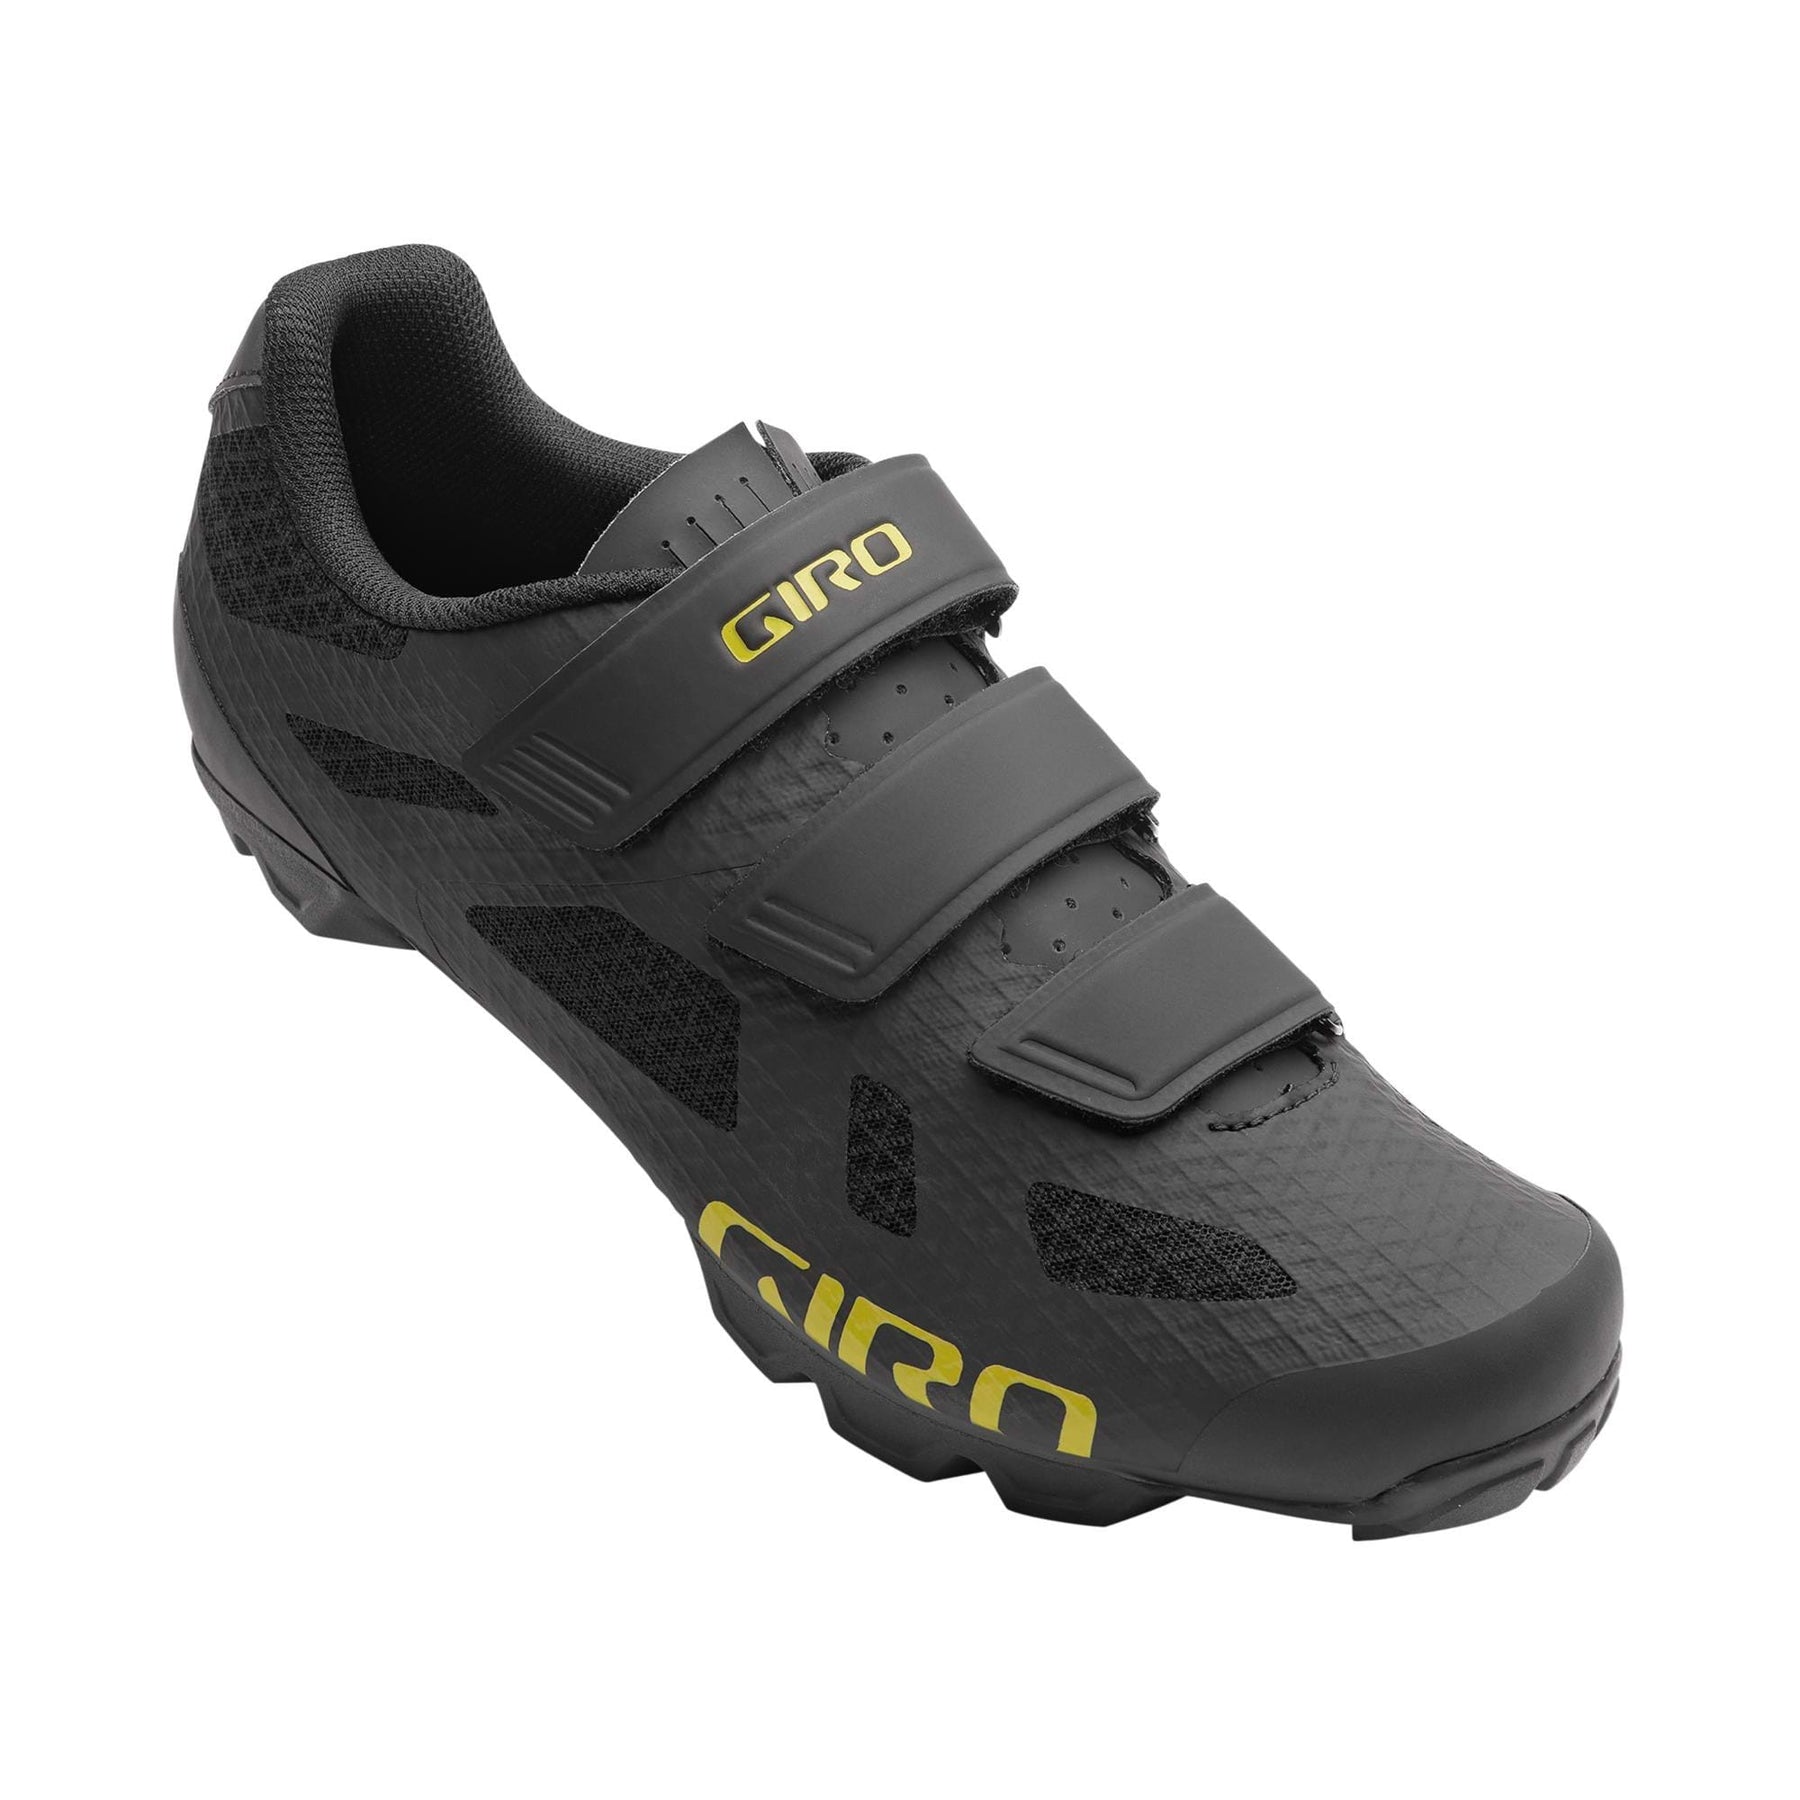 Giro Ranger Mtb Cycling Shoes